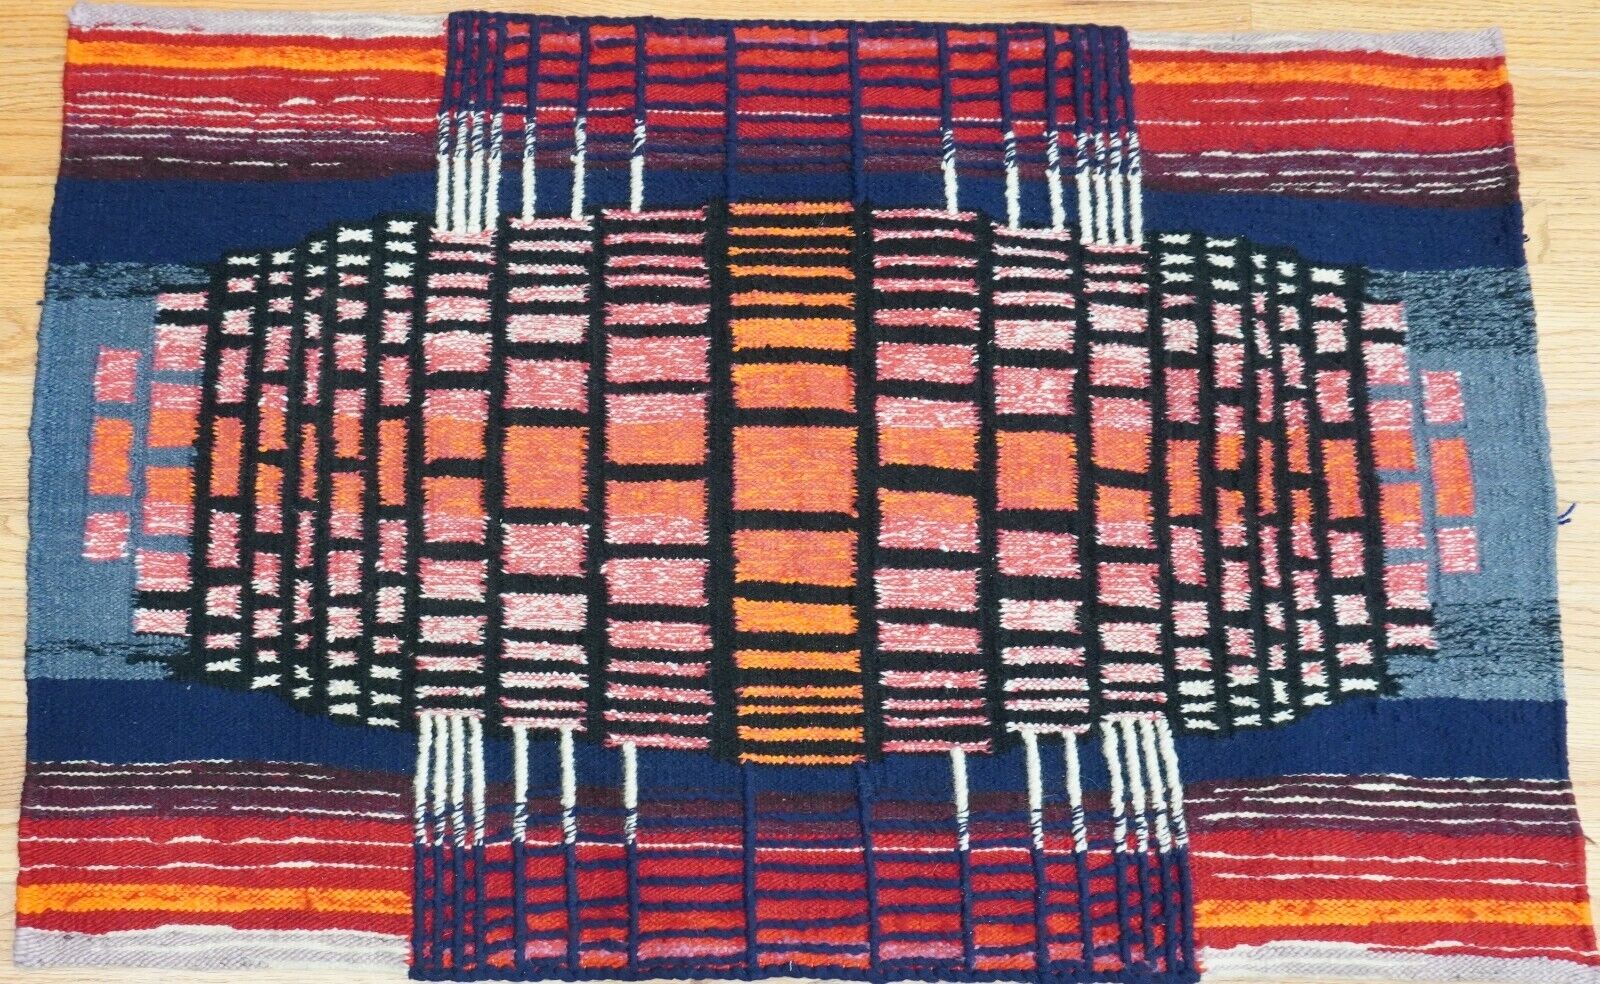 2'6" x 4' Hand Woven Polish Poland Tapestry Weaving Wool Kilim Area Rug  